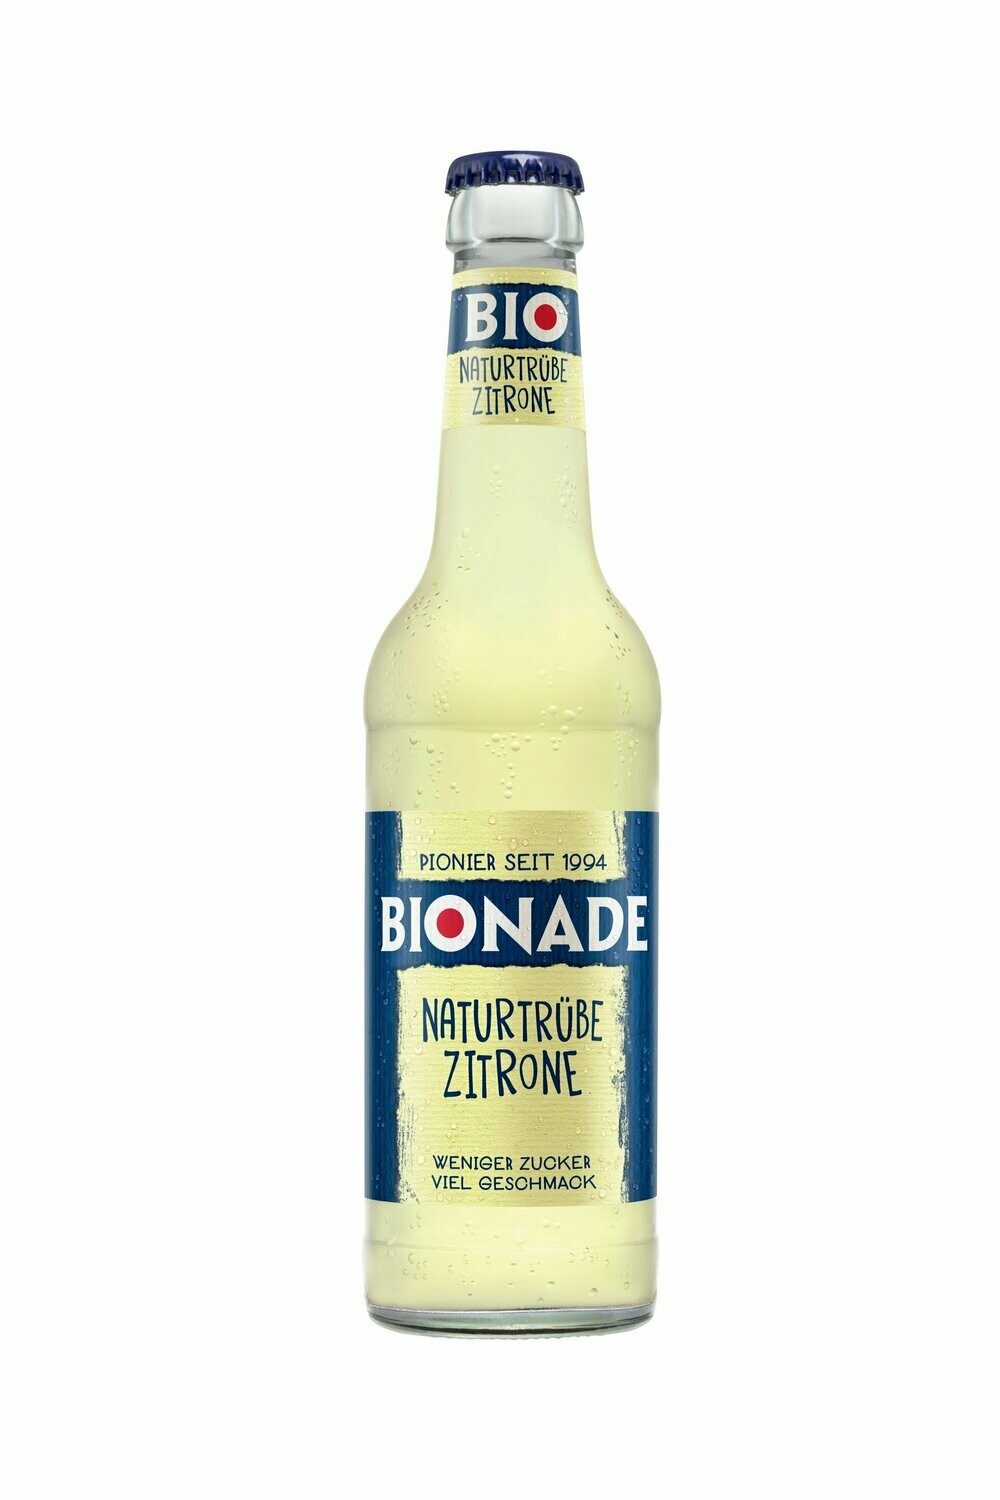 Bionade naturtrübe Zitrone
(12x 0,33l FL Glas 11,99 € inkl. MwSt. zzgl. Pfand)